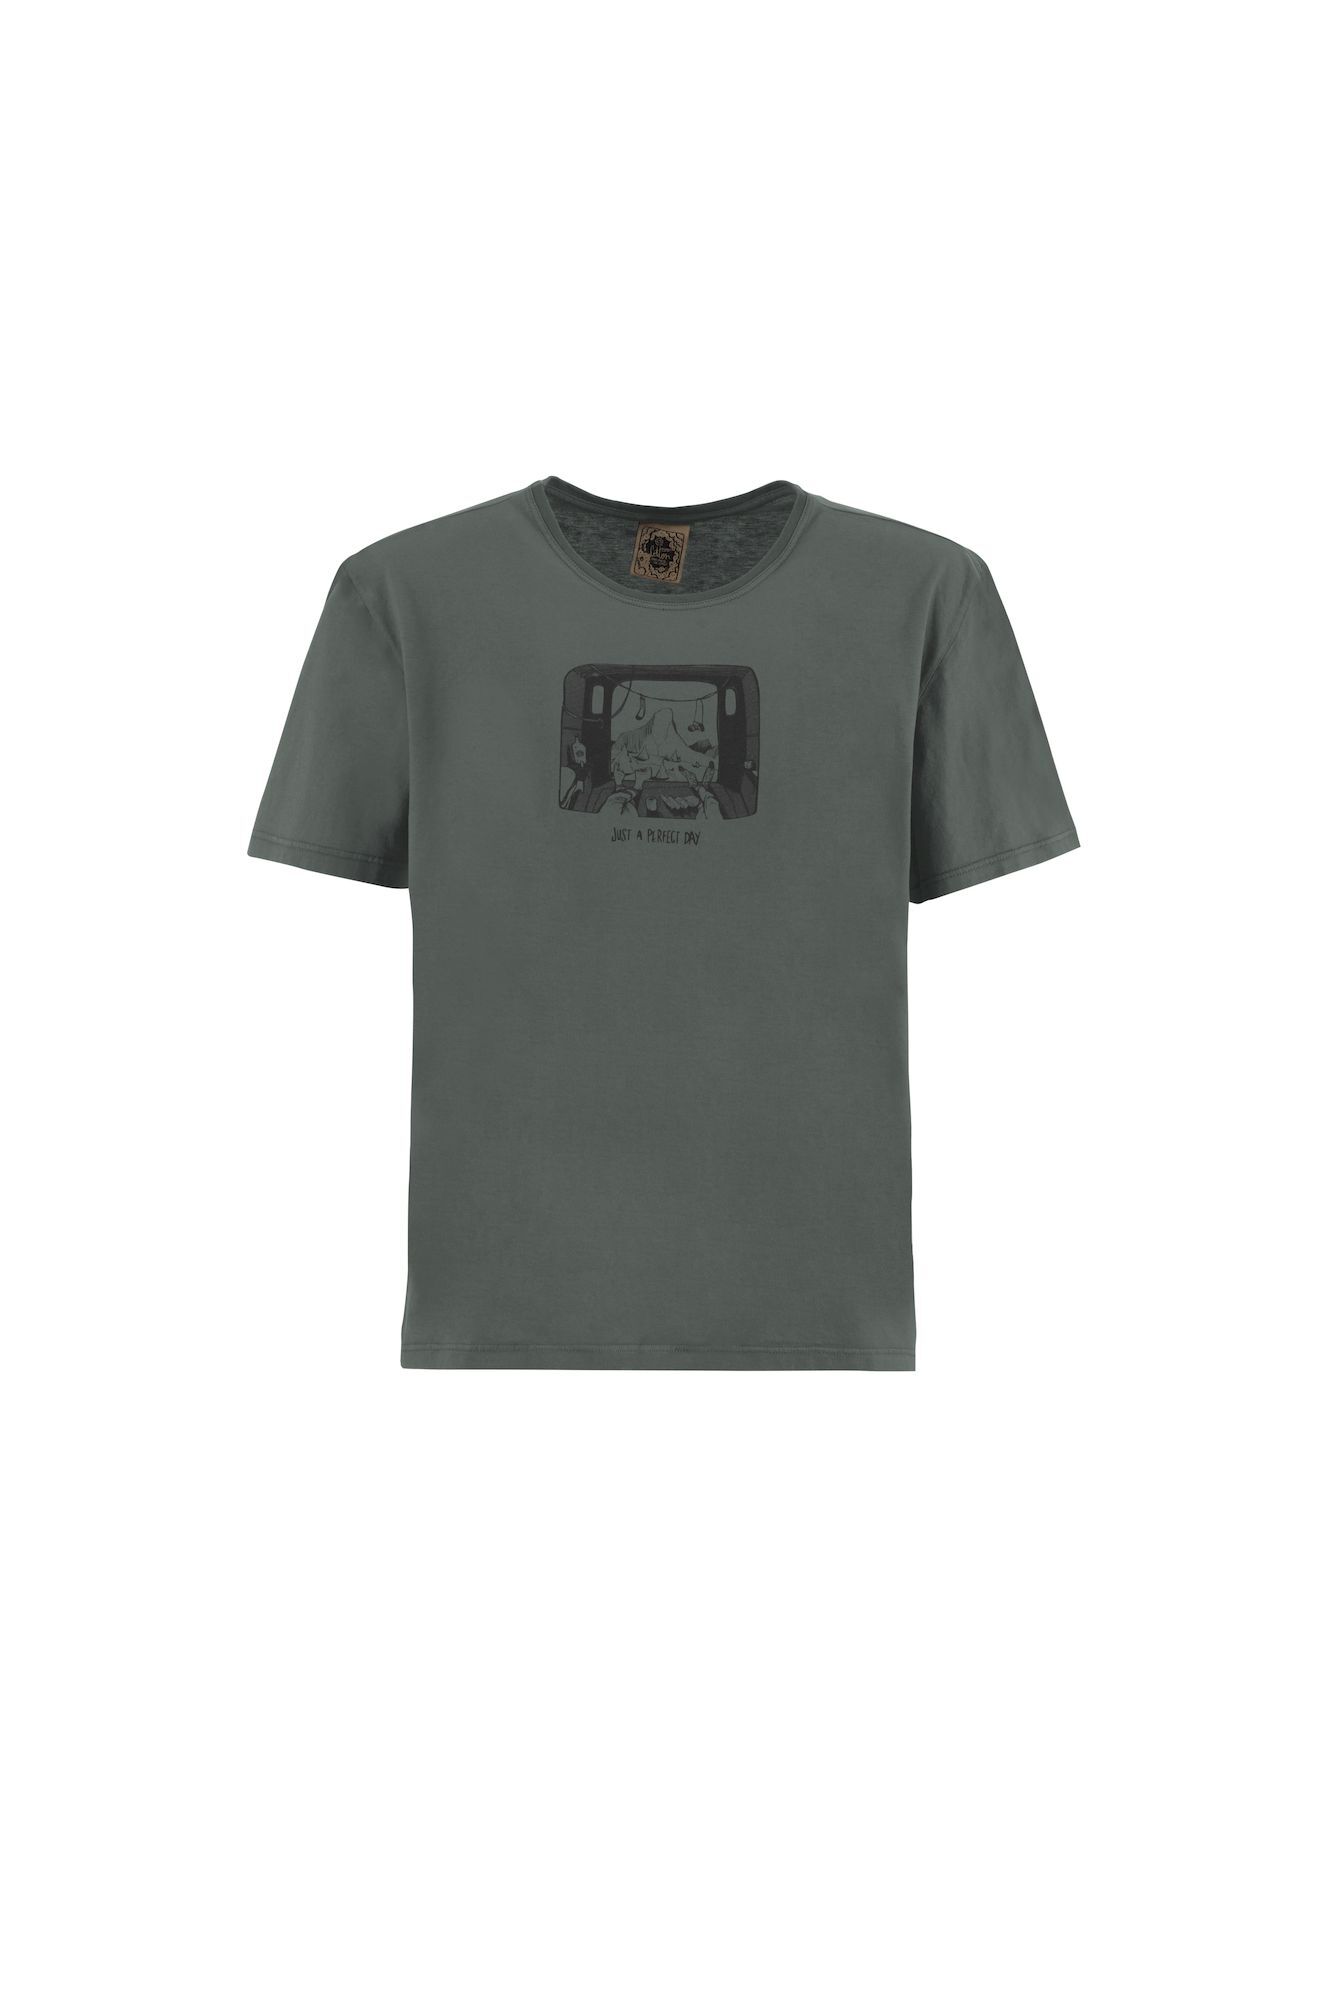 E9 Lez - T-shirt - Men's